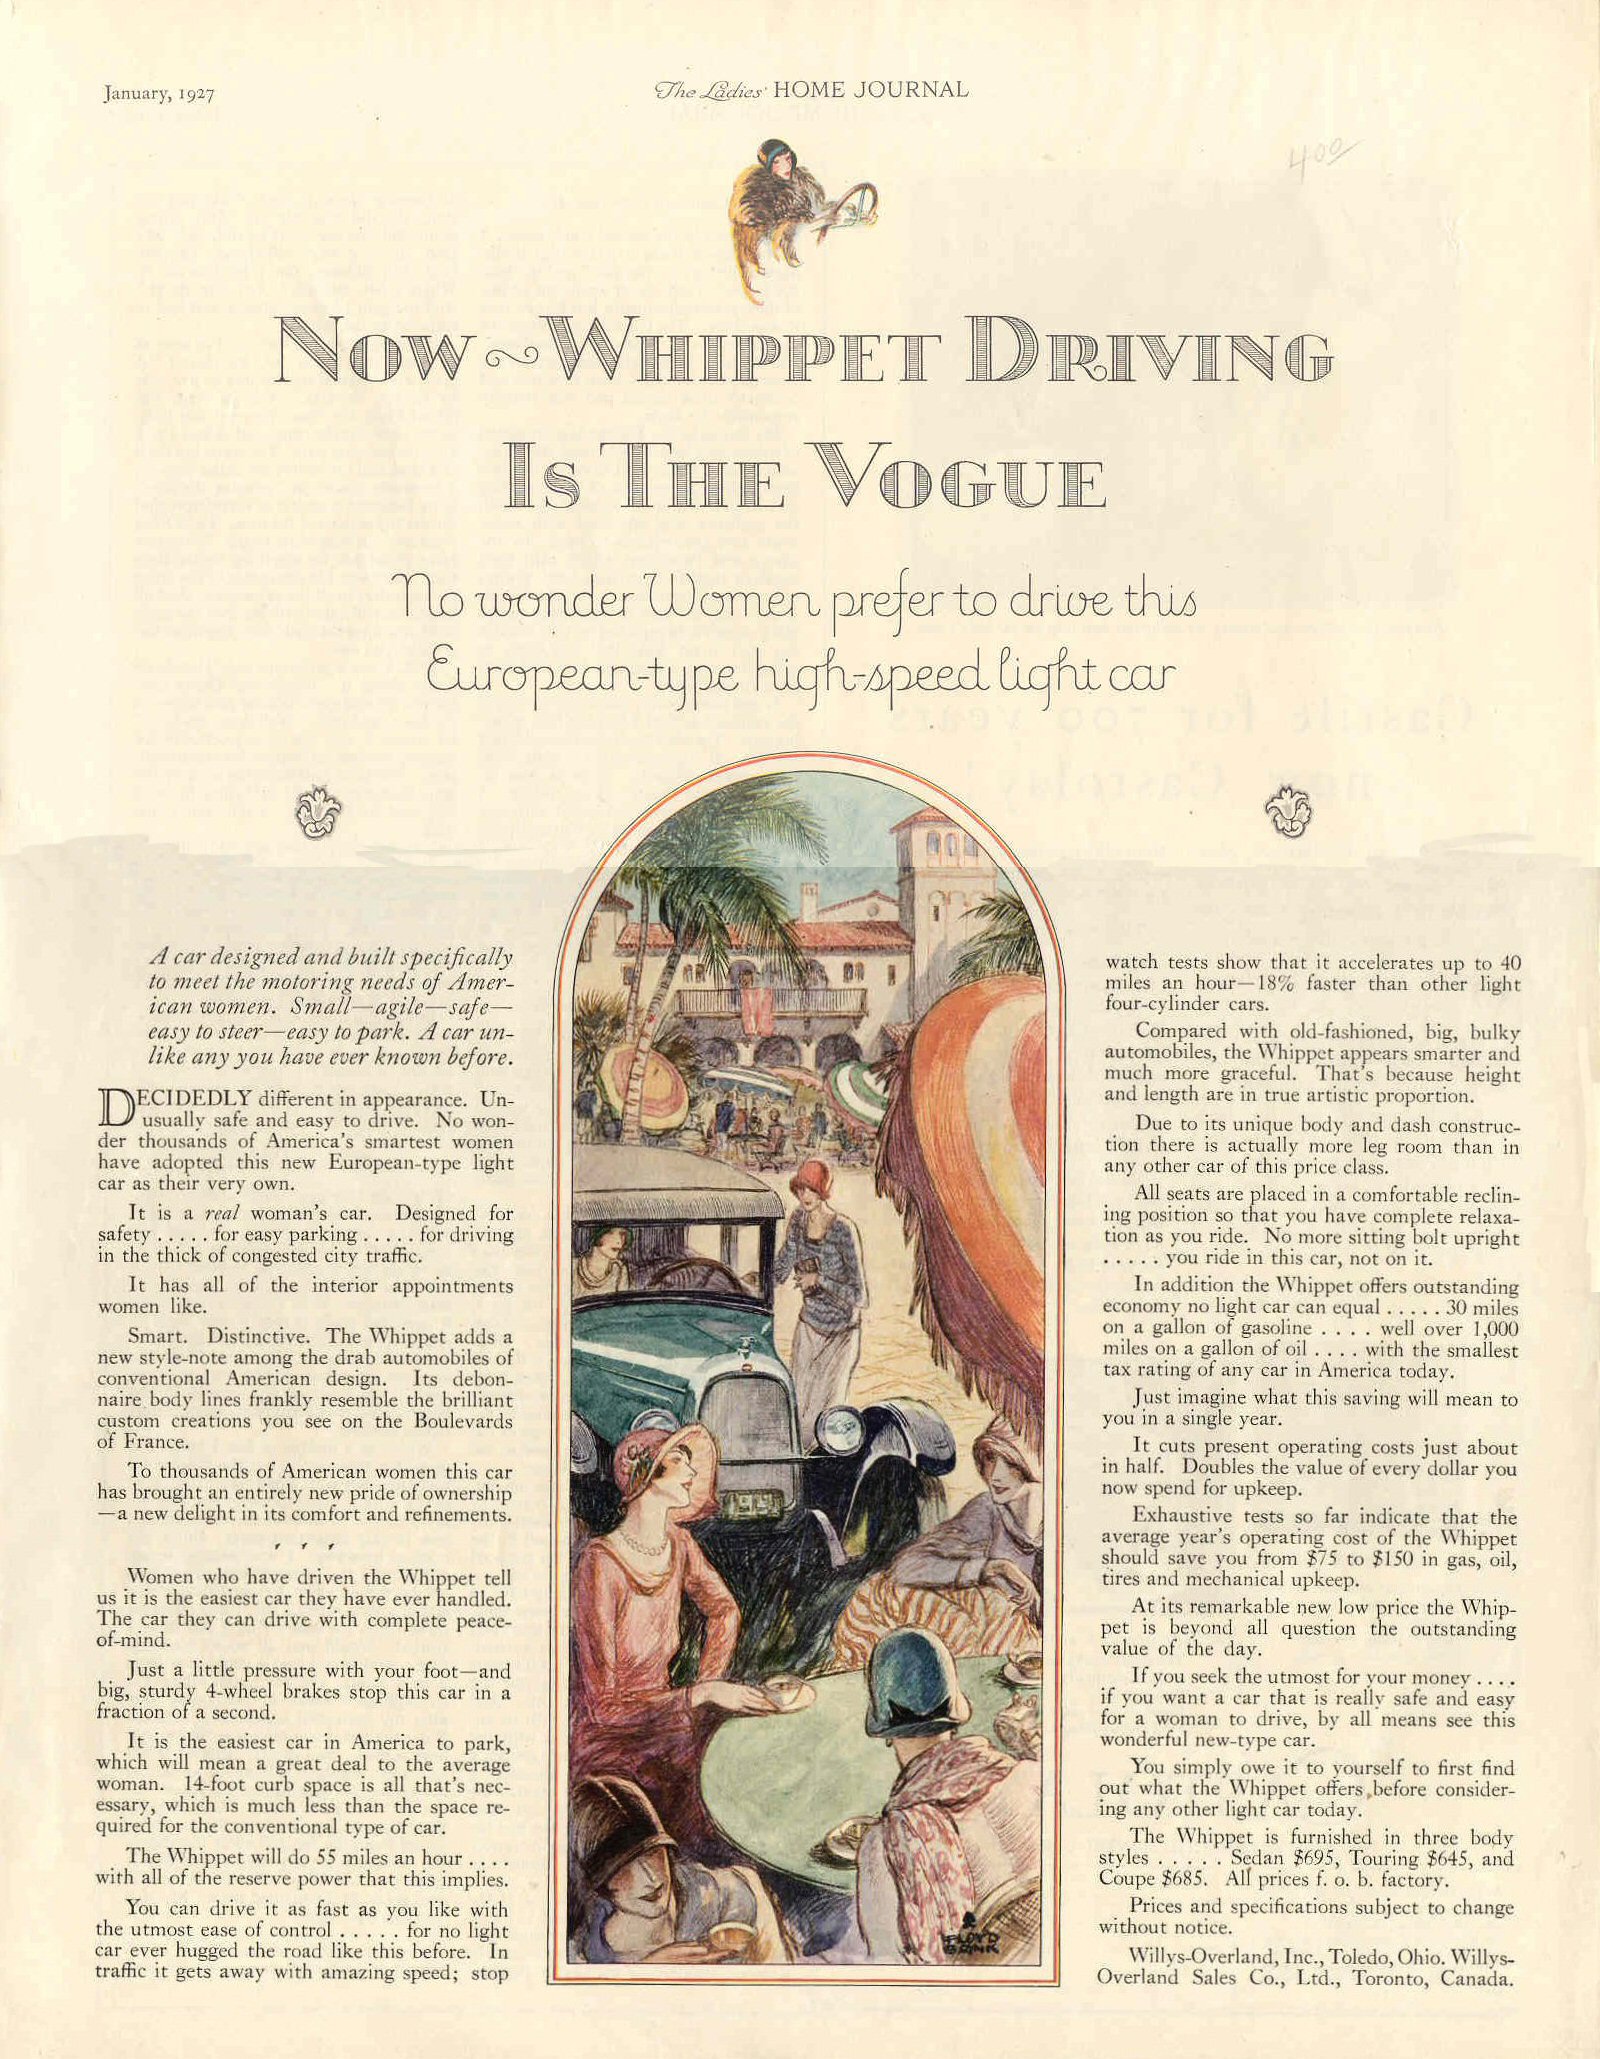 1929 Overland Auto Advertising